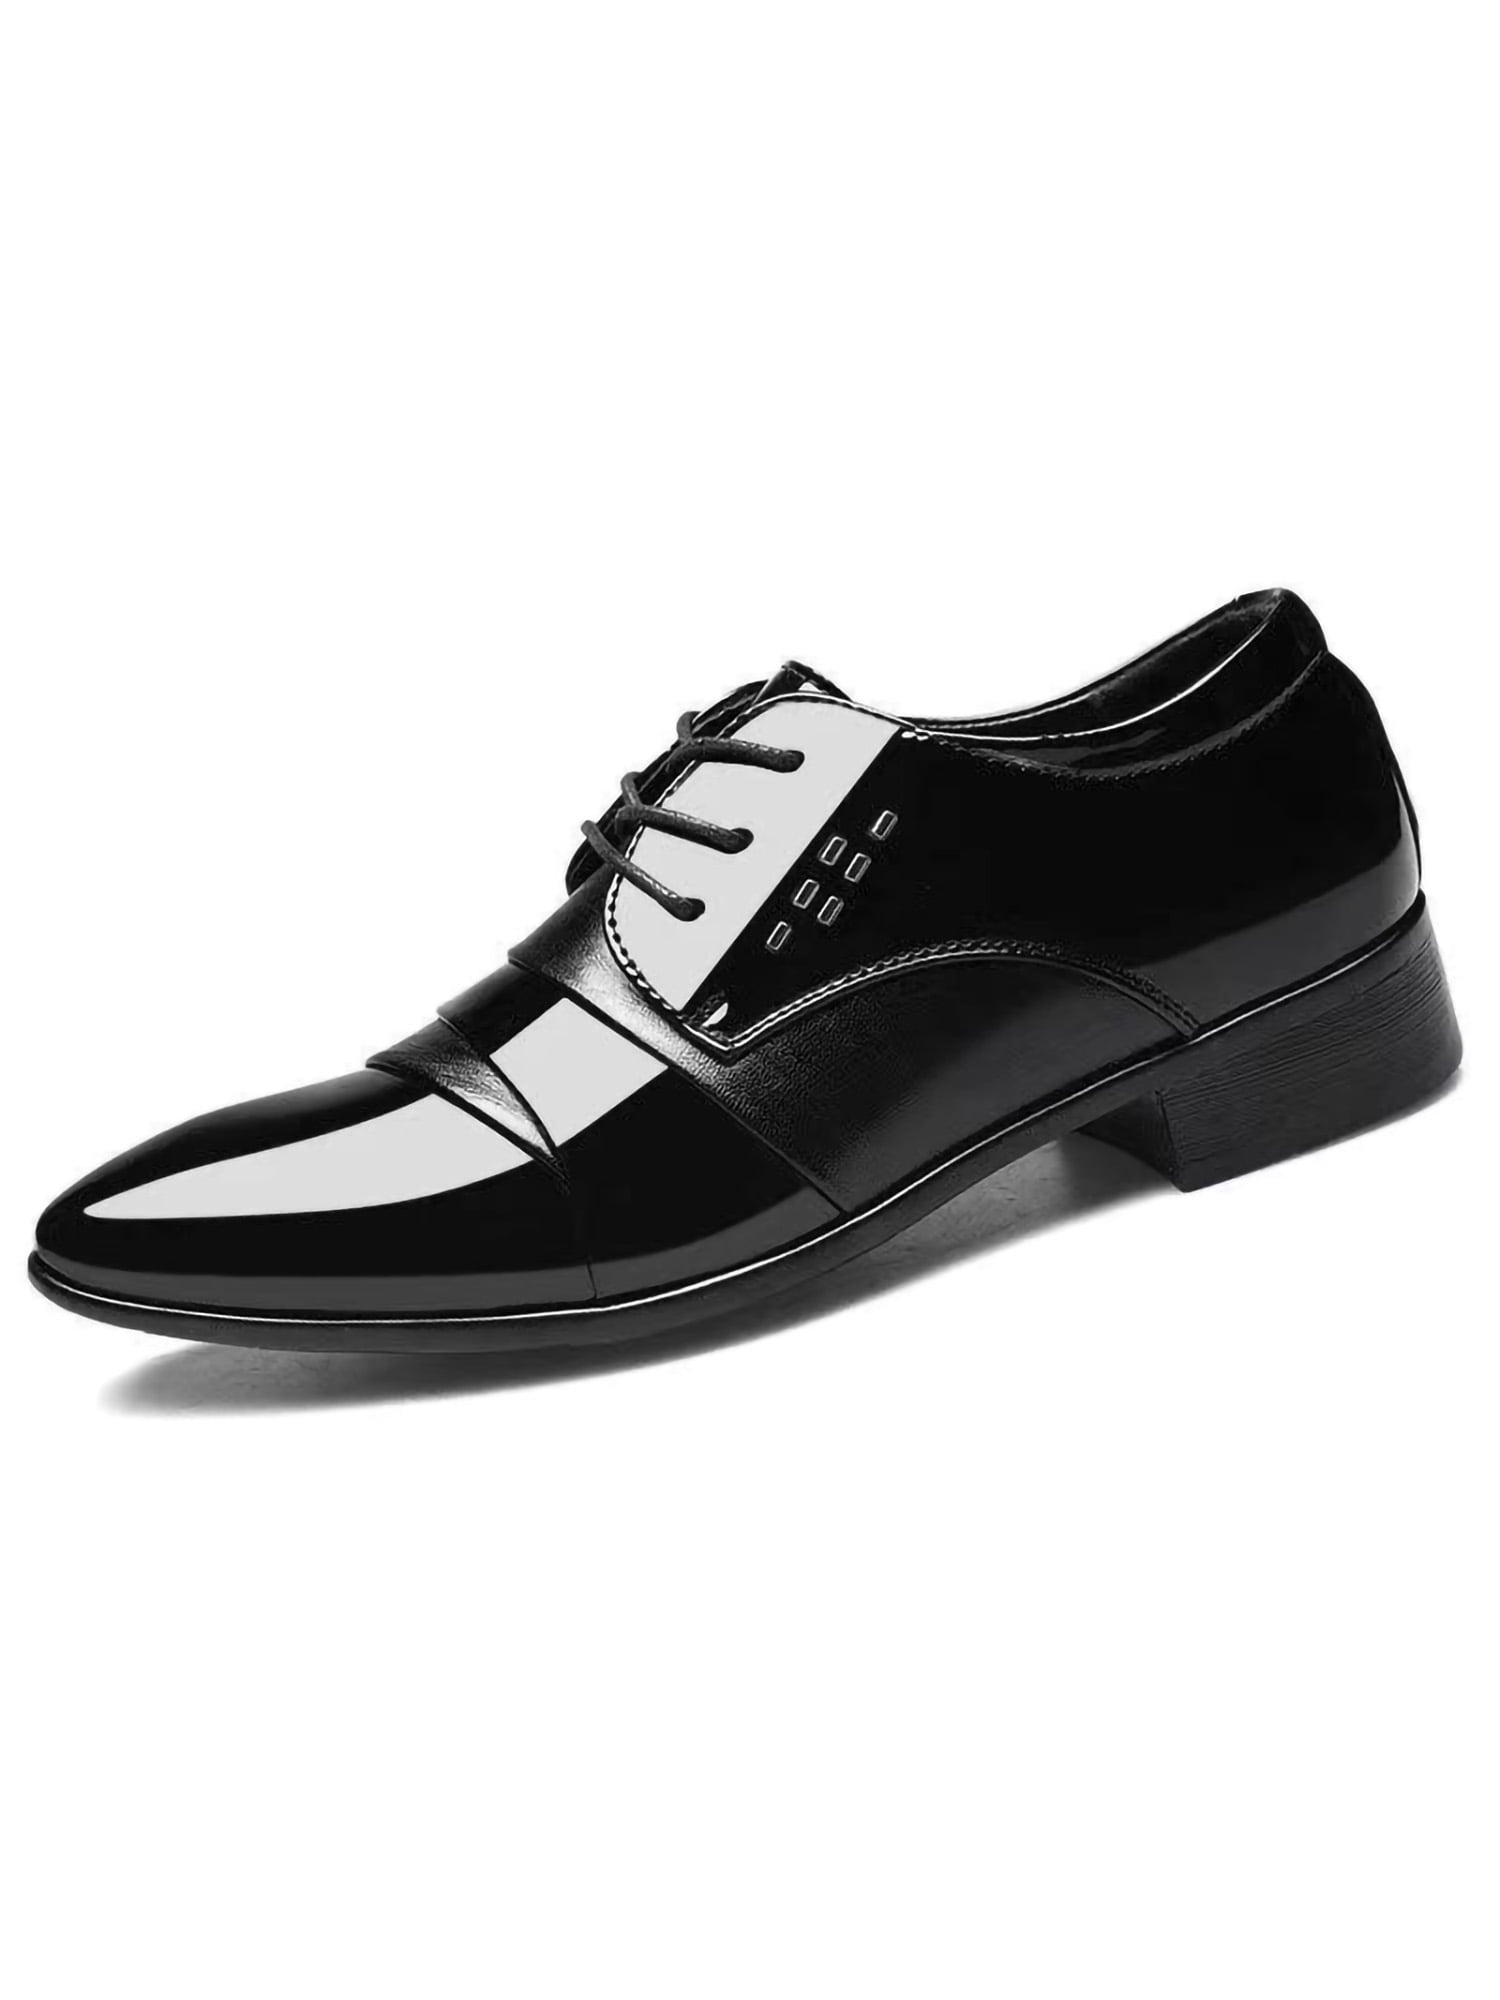 Tenmix Mens Oxfords Lace Up Leather Shoe Formal Dress Shoes Business ...